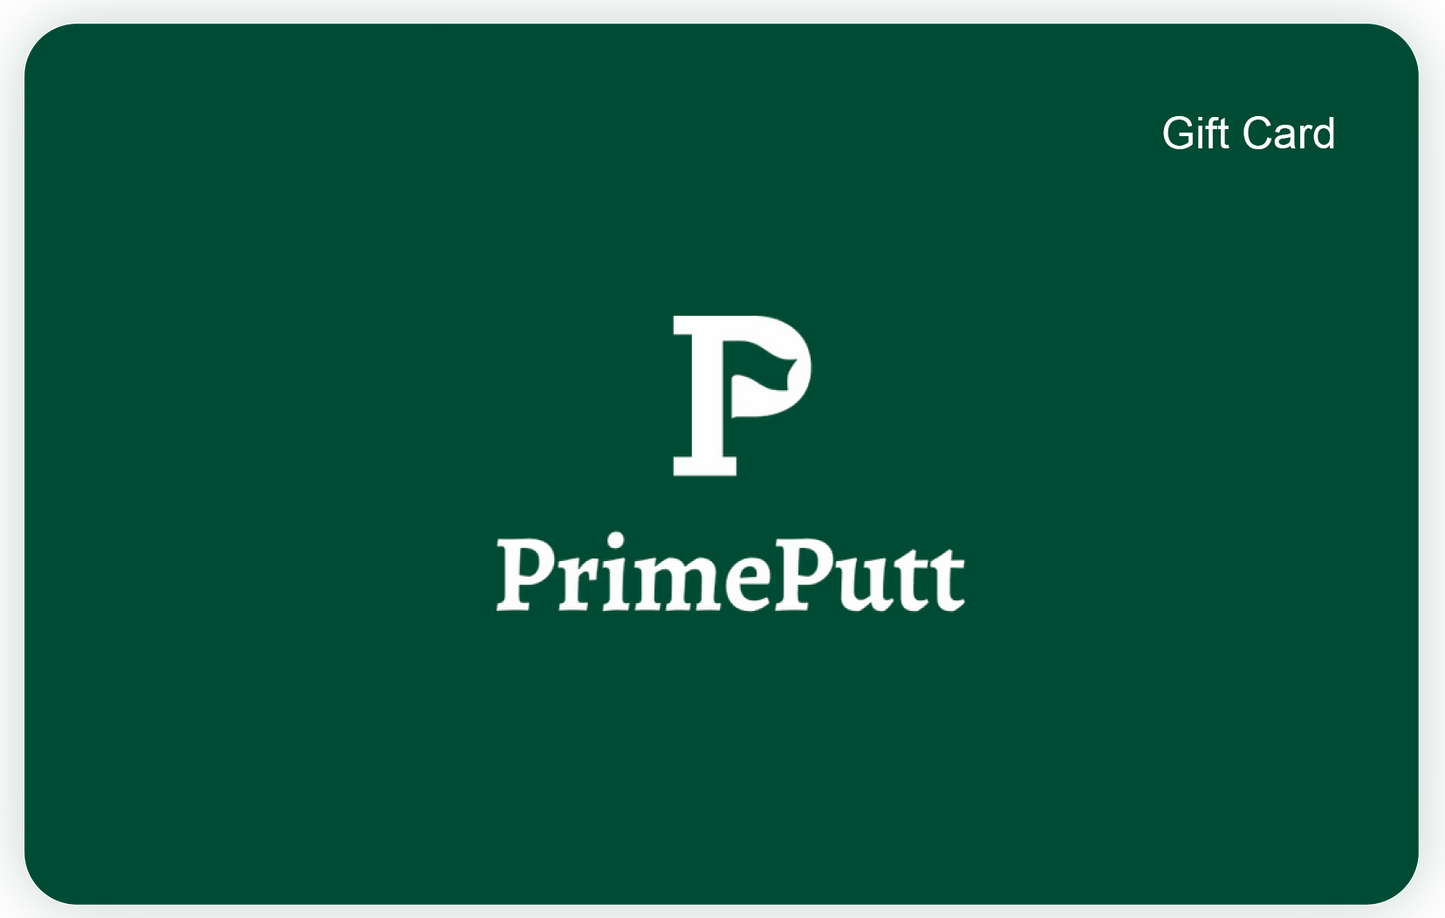 PrimePutt Gift Card